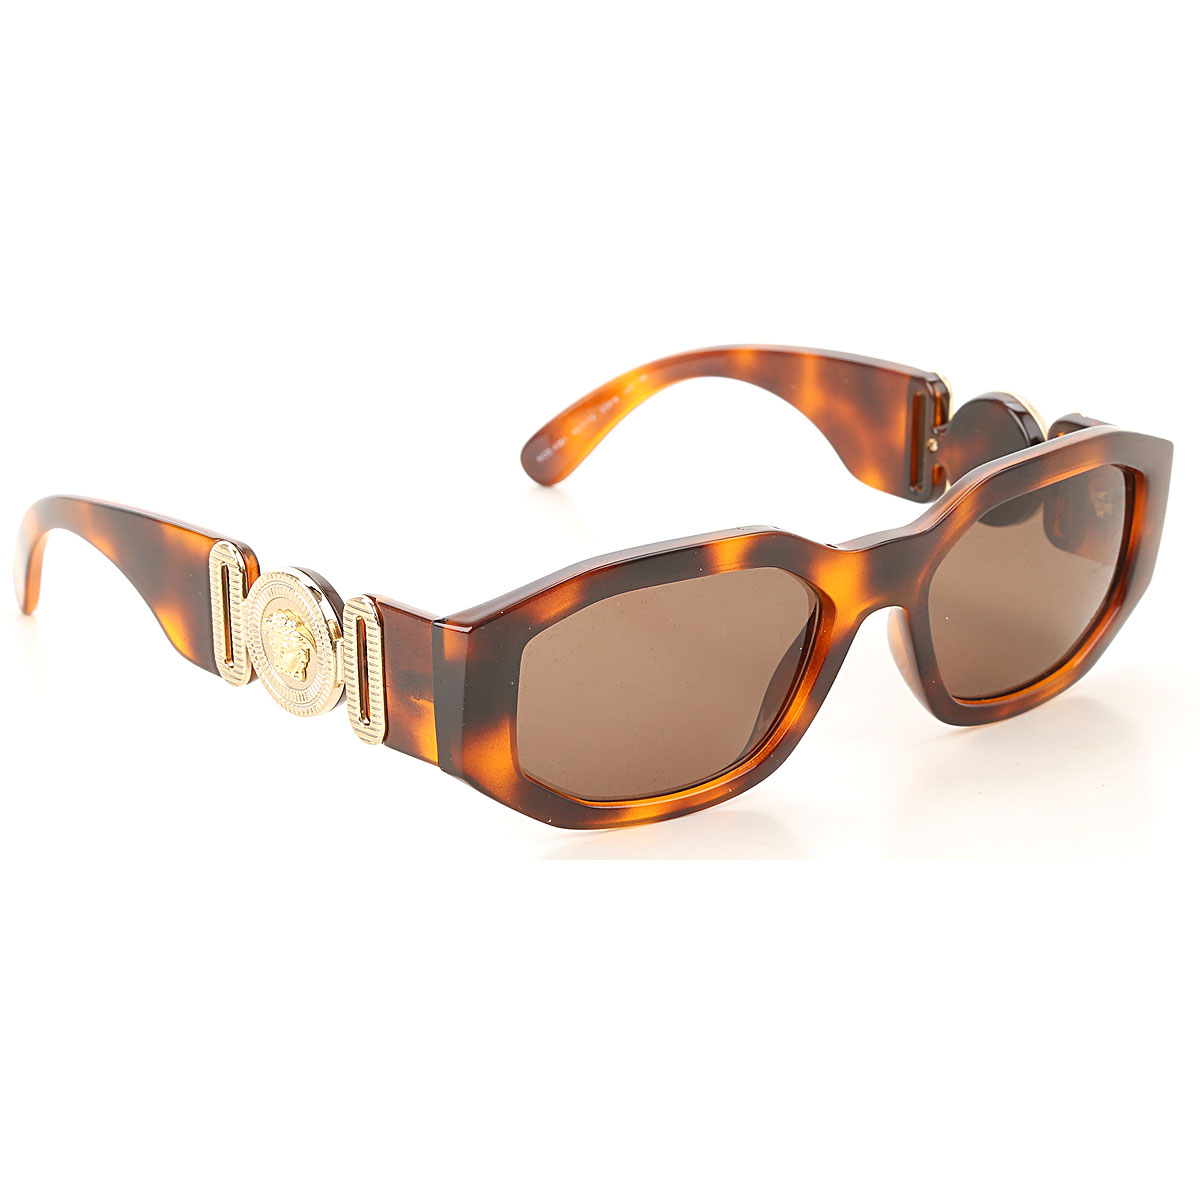 Sunglasses Gianni Versace, Style code: ve4361-5217-73